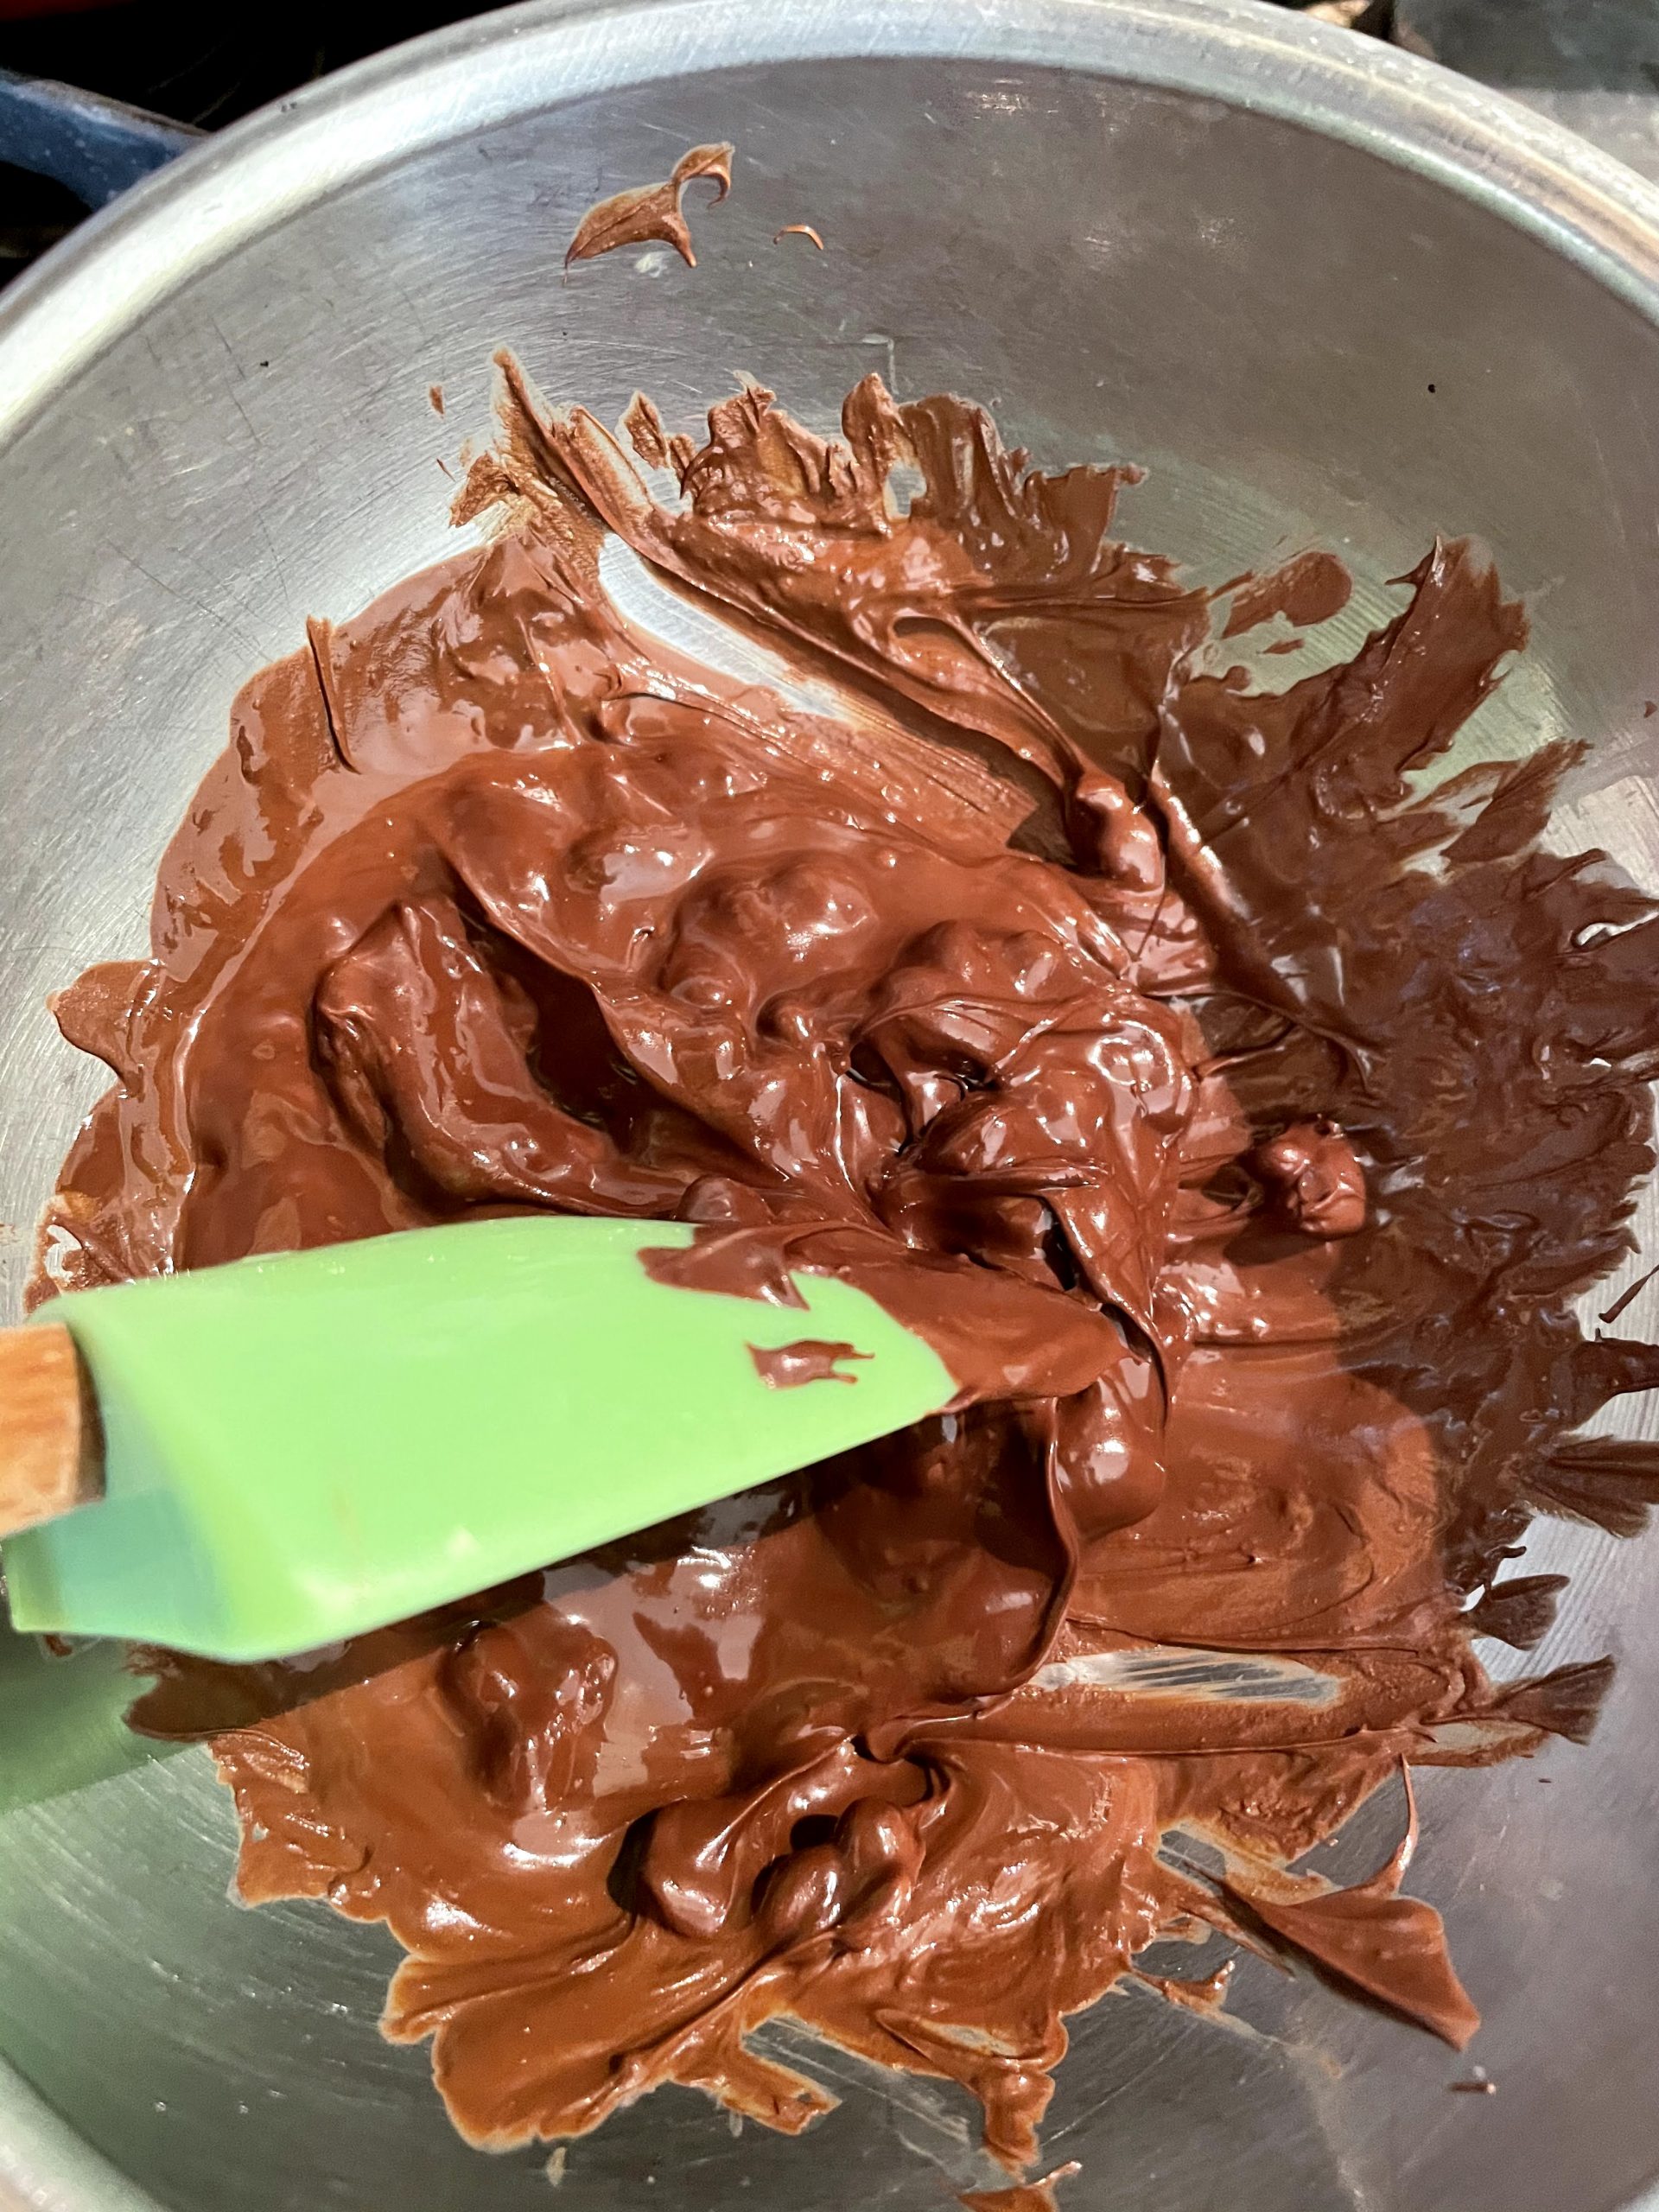 Use spatula to stir melted chocolate.  